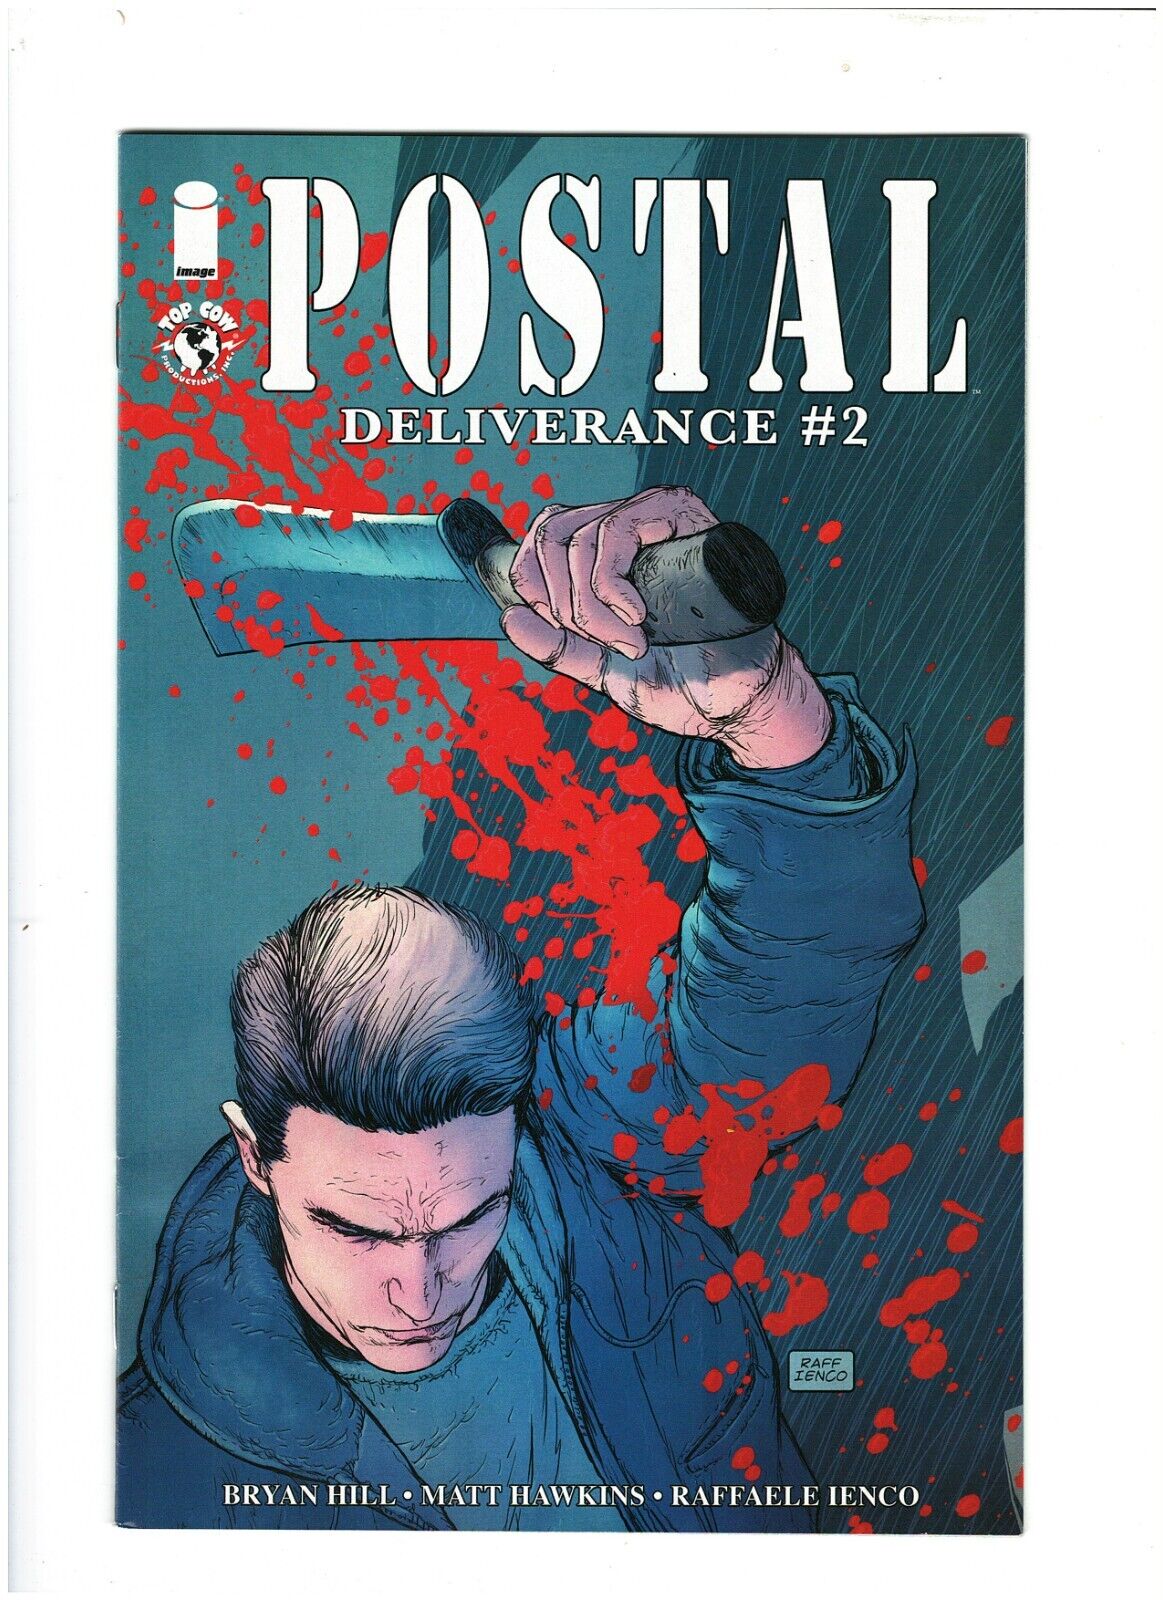 Postal: Deliverance #2 Image Comics Bryan Hill 2019 VF+ 8.5